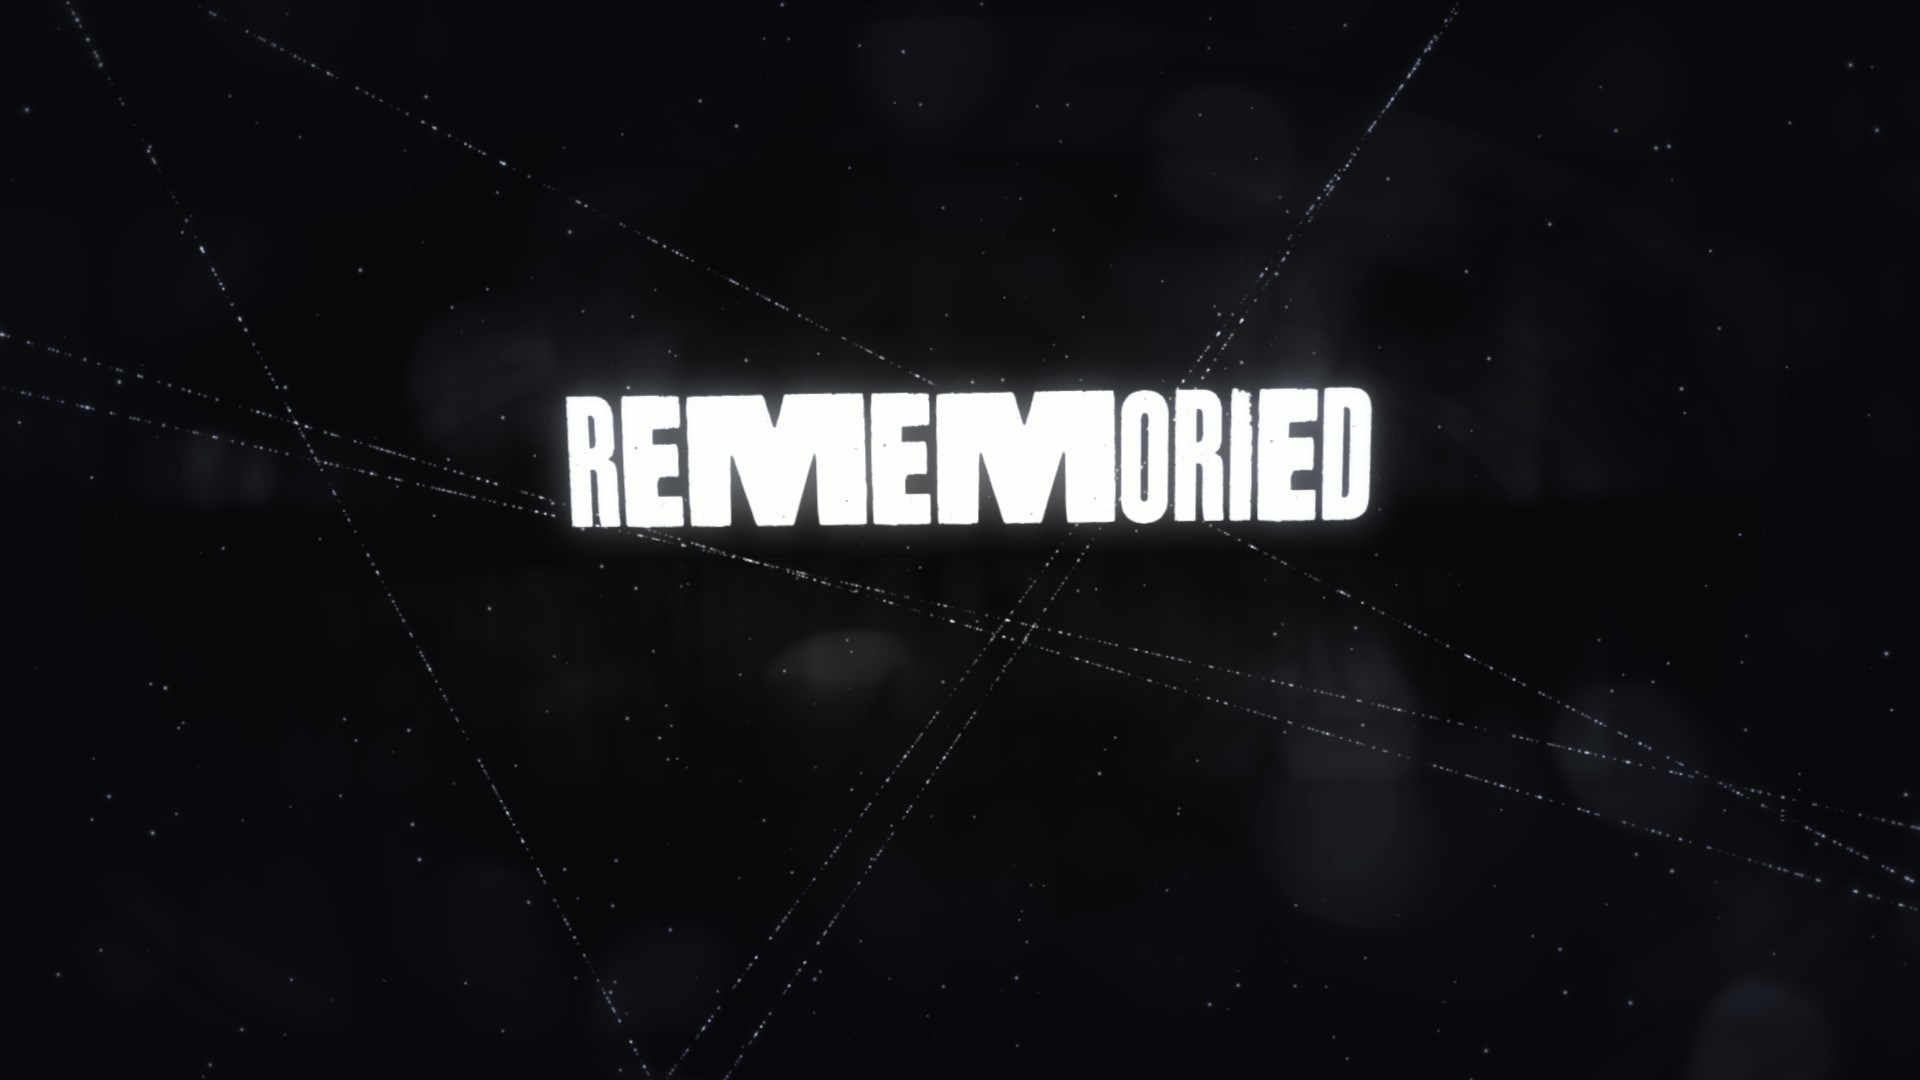 Rememoried